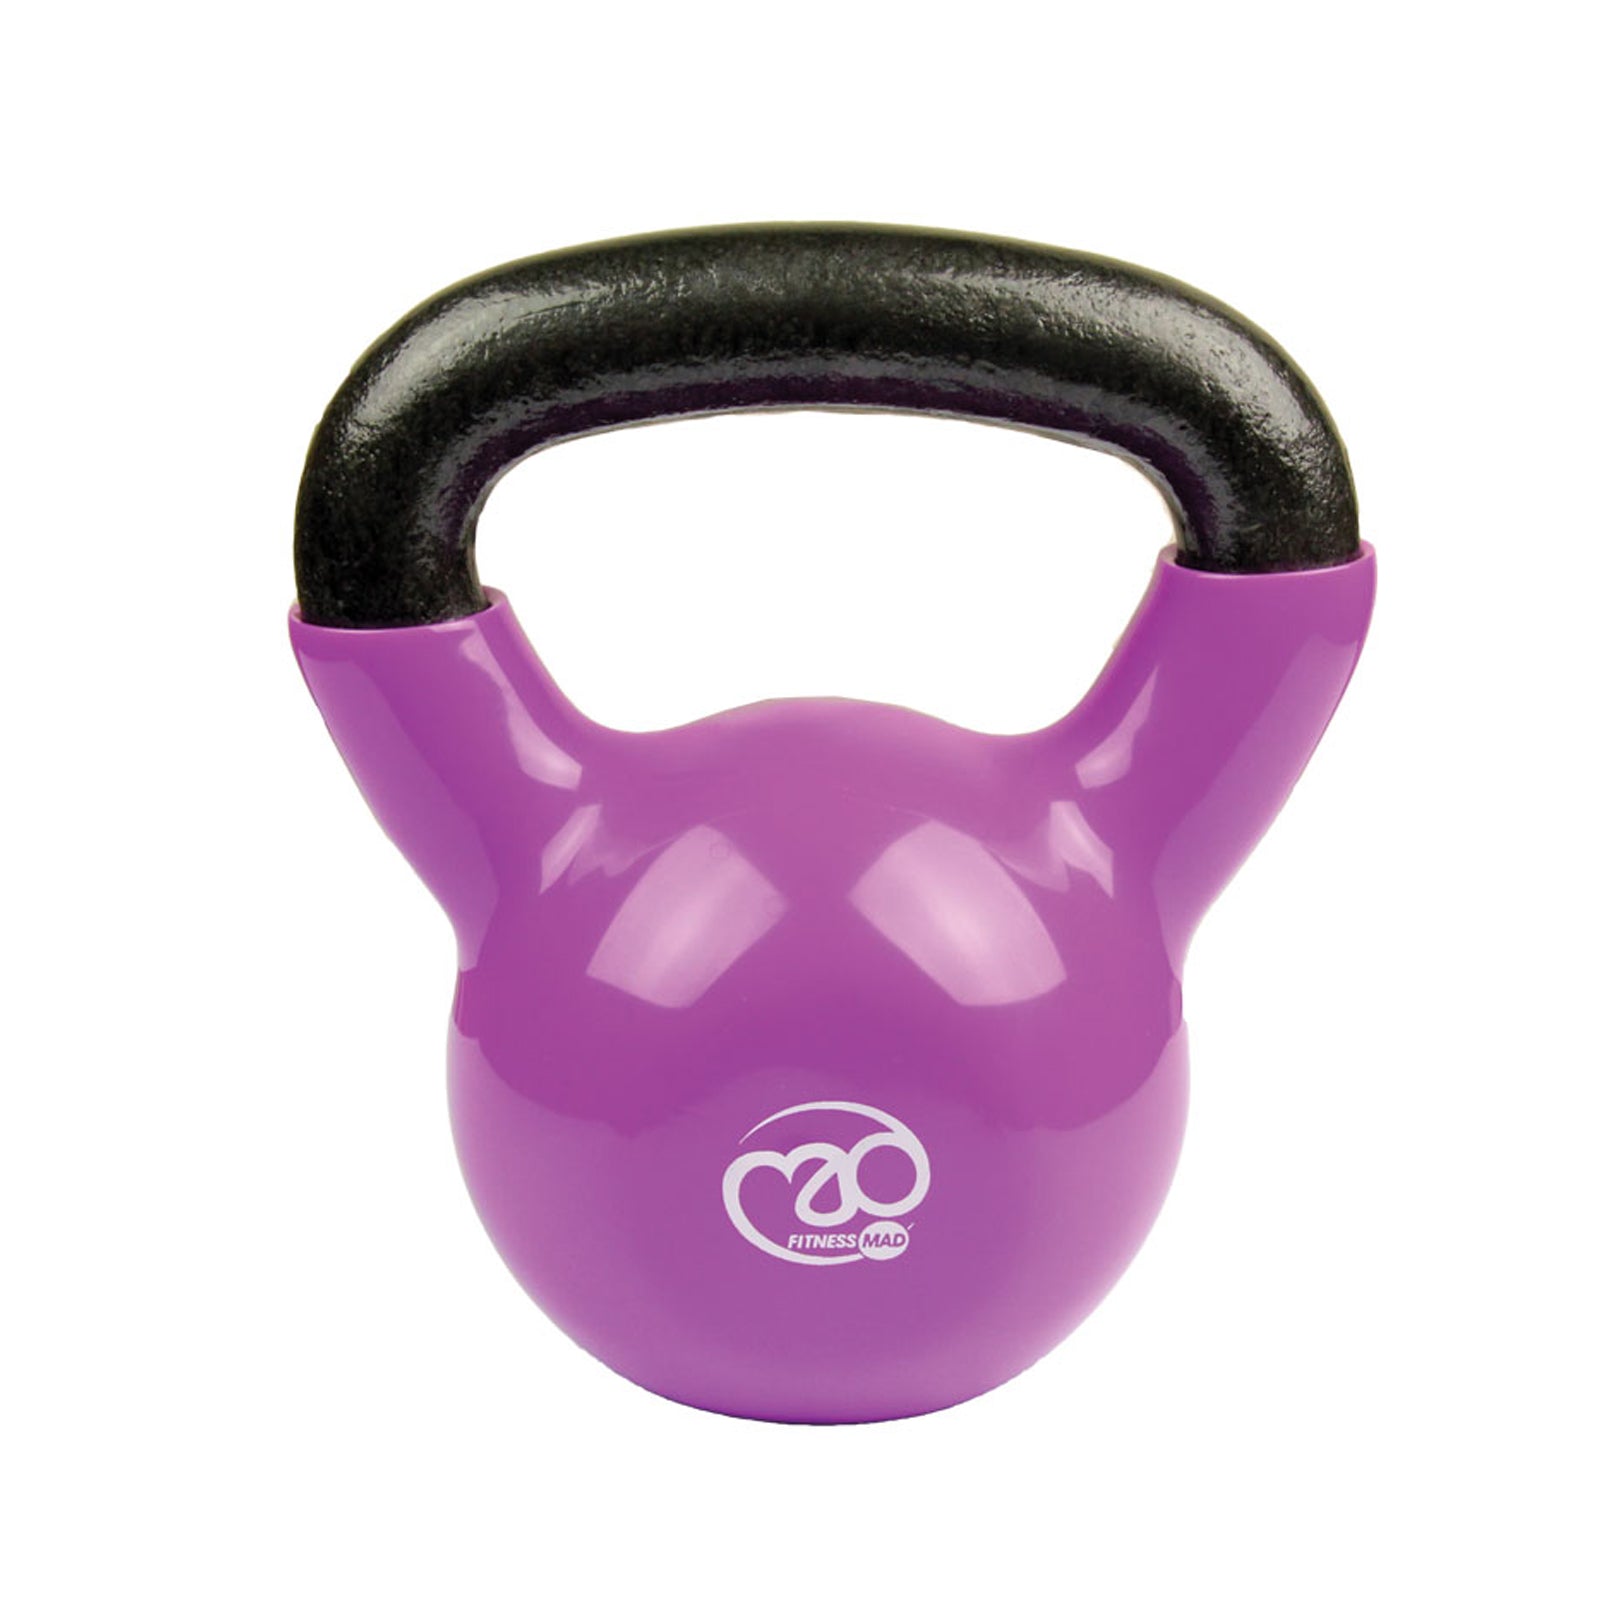 Fitness MAD 10kg Kettlebell - 8kg (Purple) Alternate 1